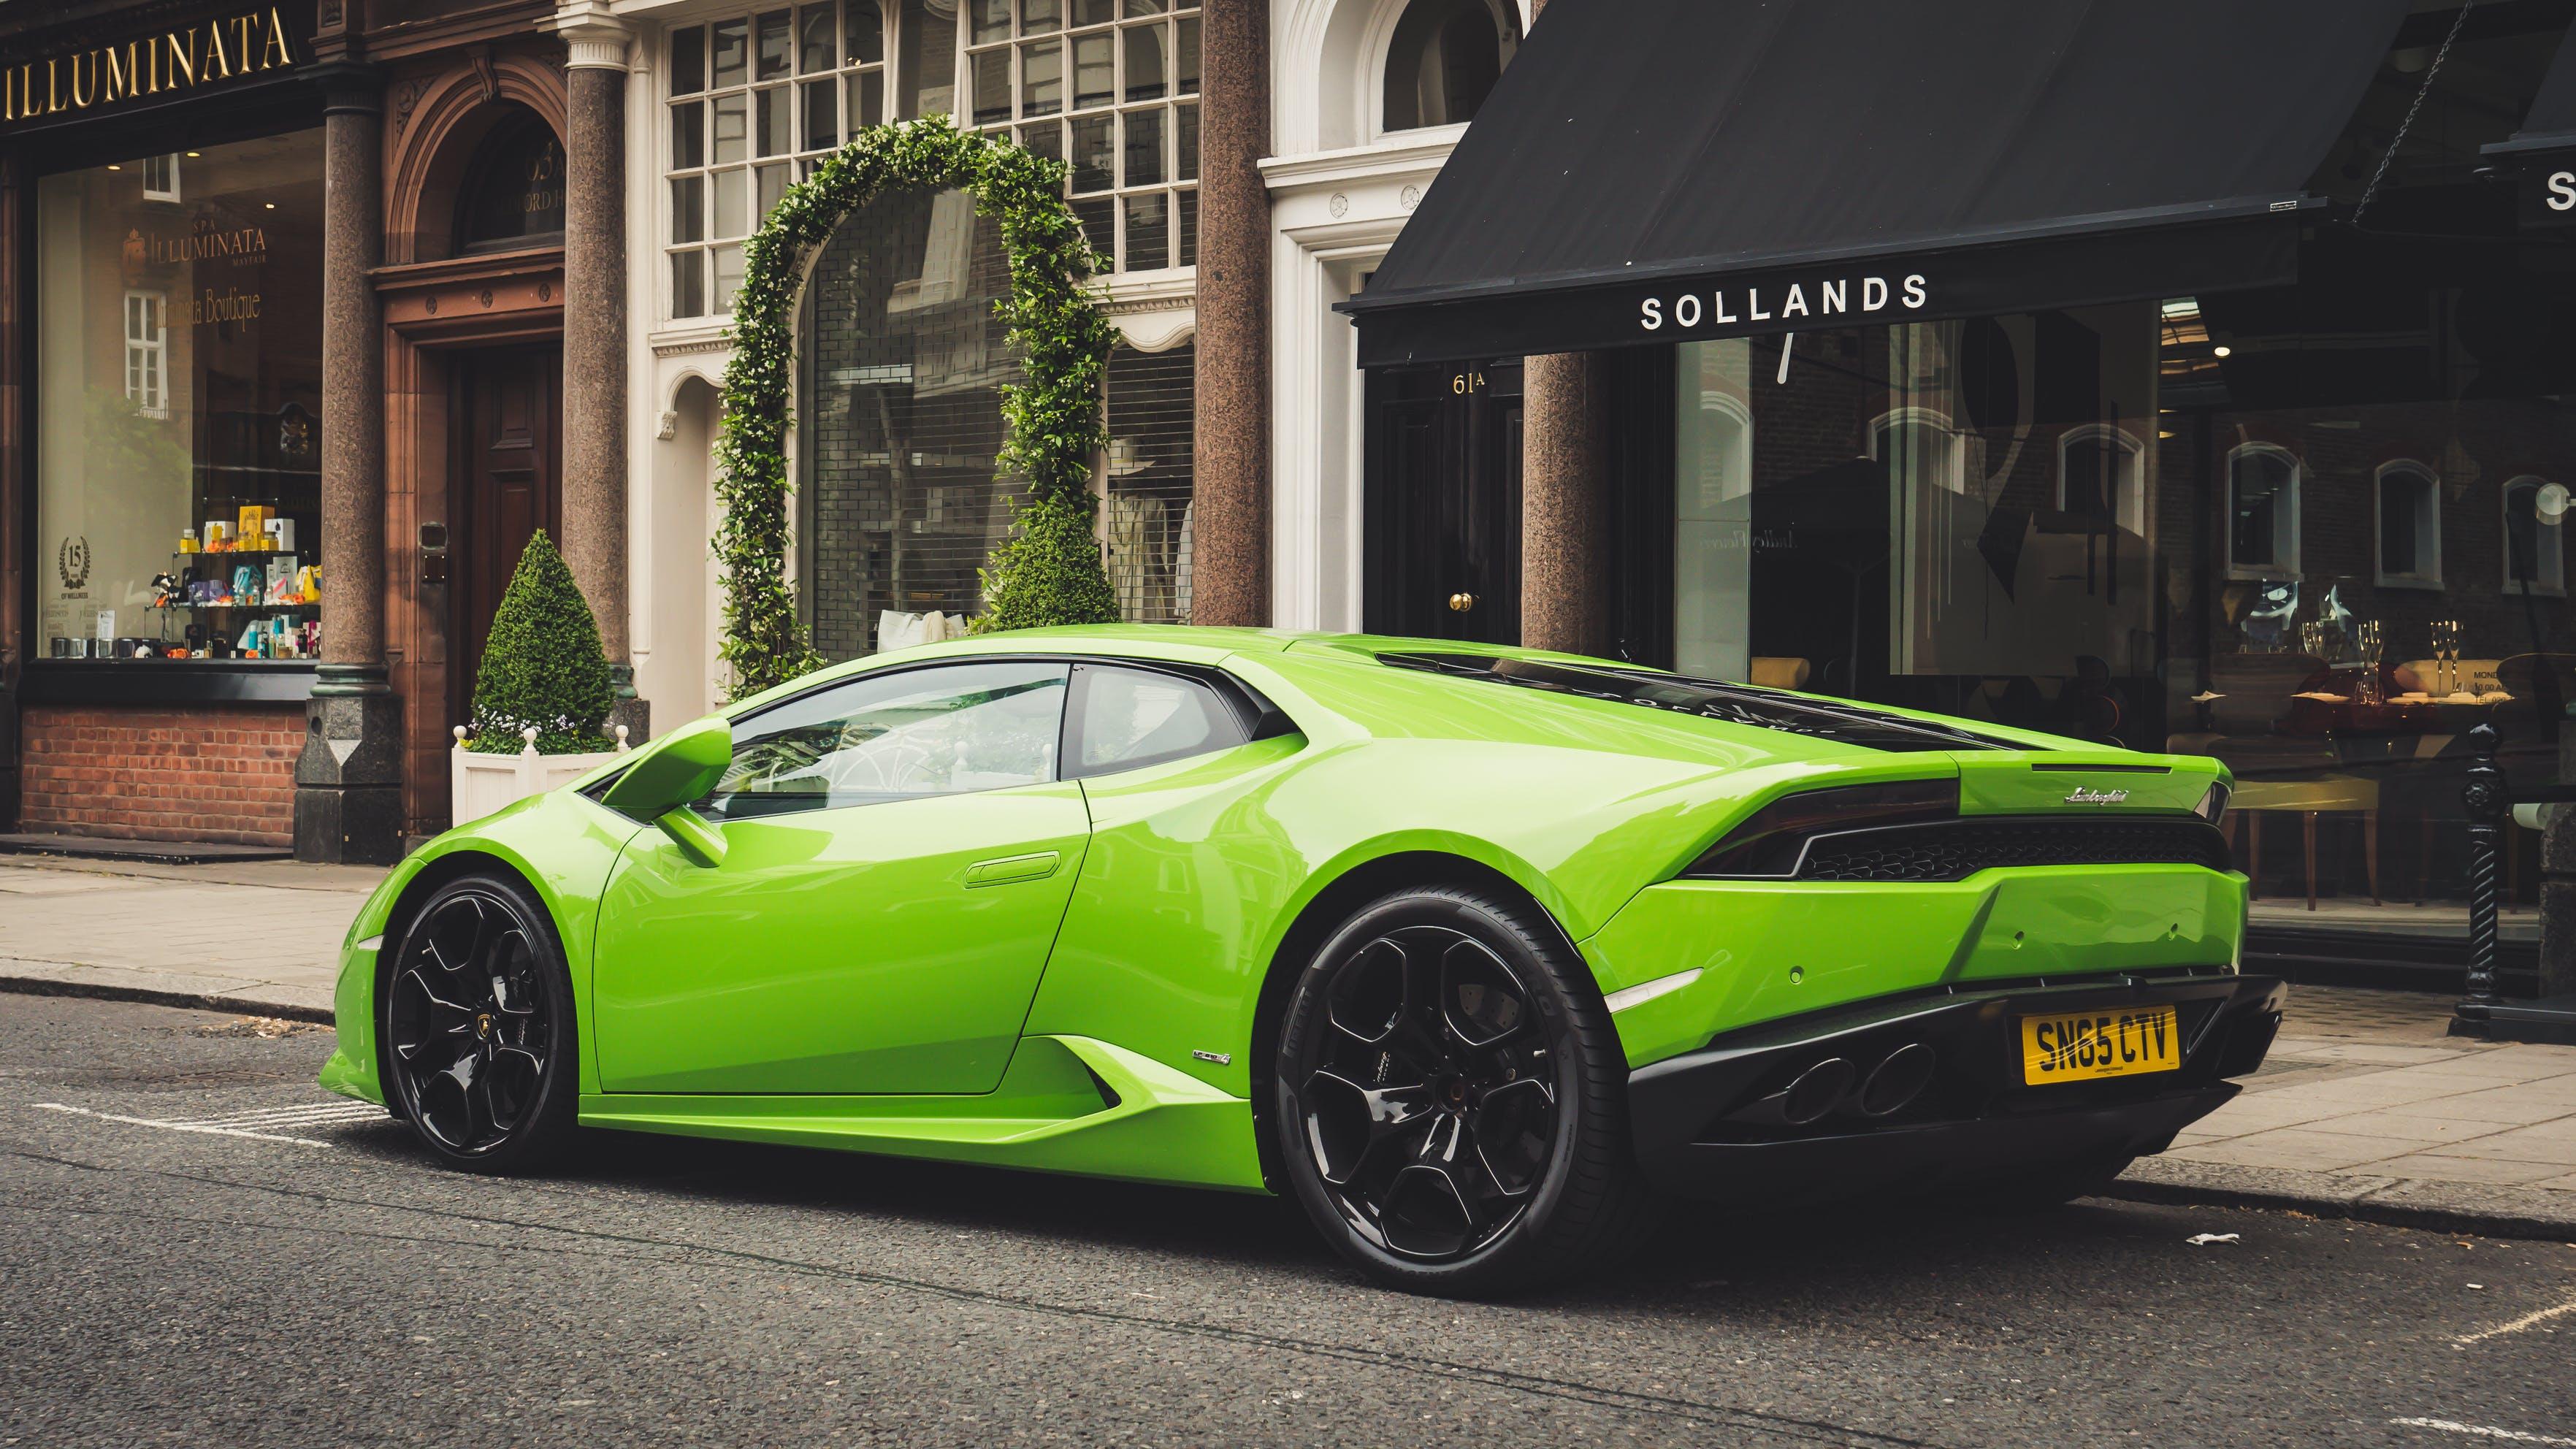 a green Lamborghini on a city street